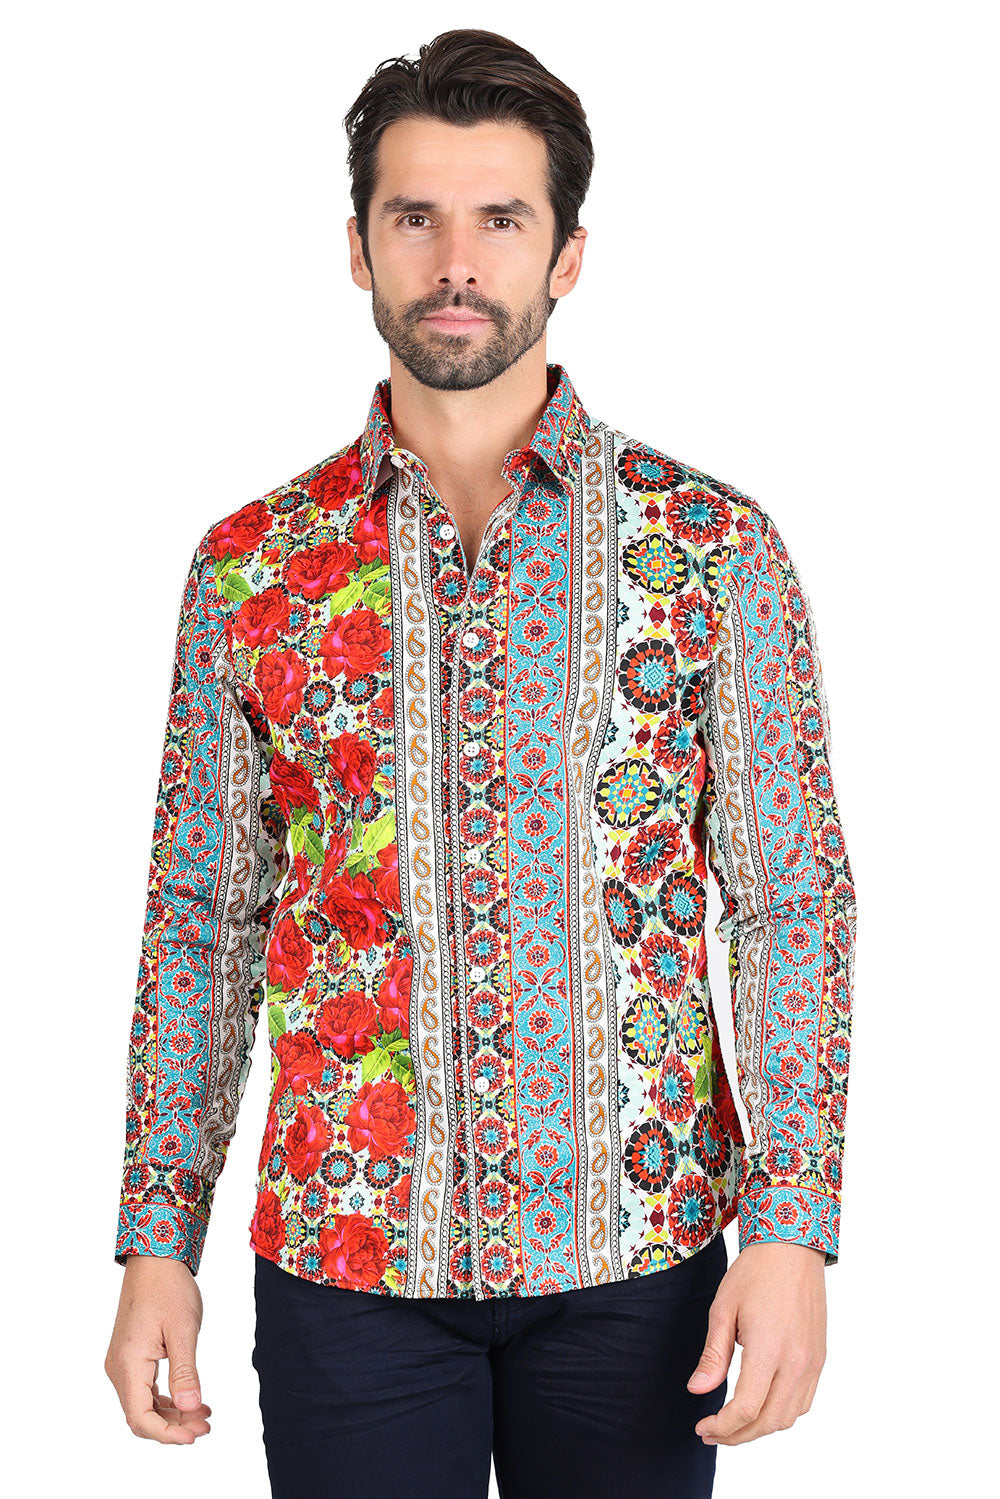 Barabas Long Sleeve Rose Pattern Men's Button Down Dress Shirts 2SA02 Multi